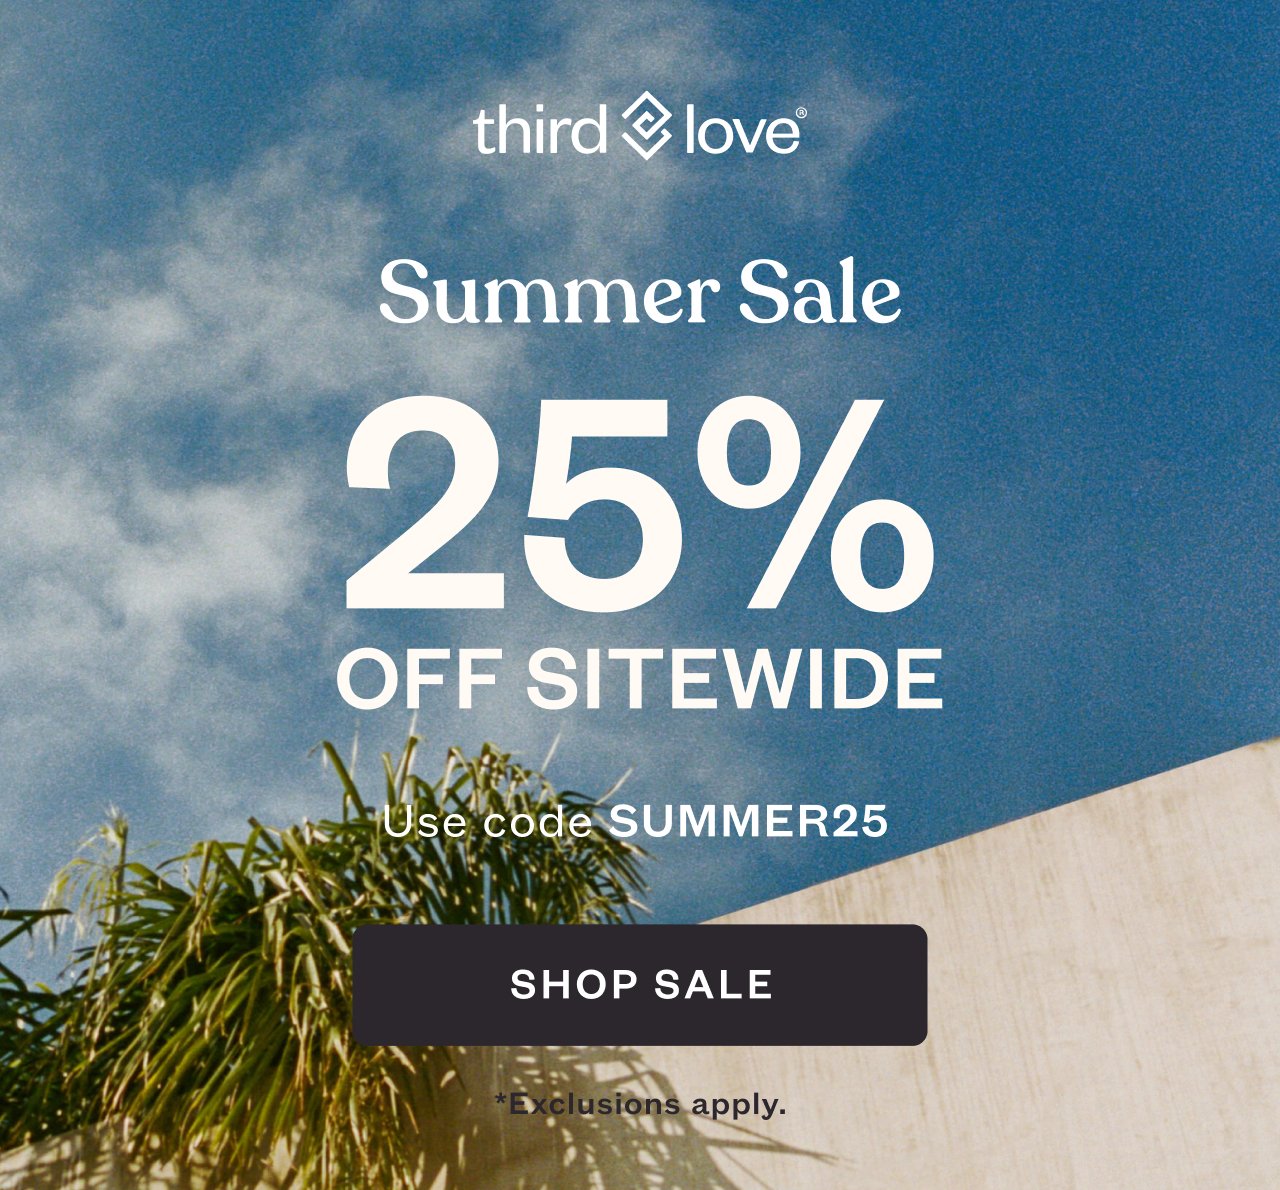 Third Love: Hot summer sale alert: Enjoy 25% off sitewide